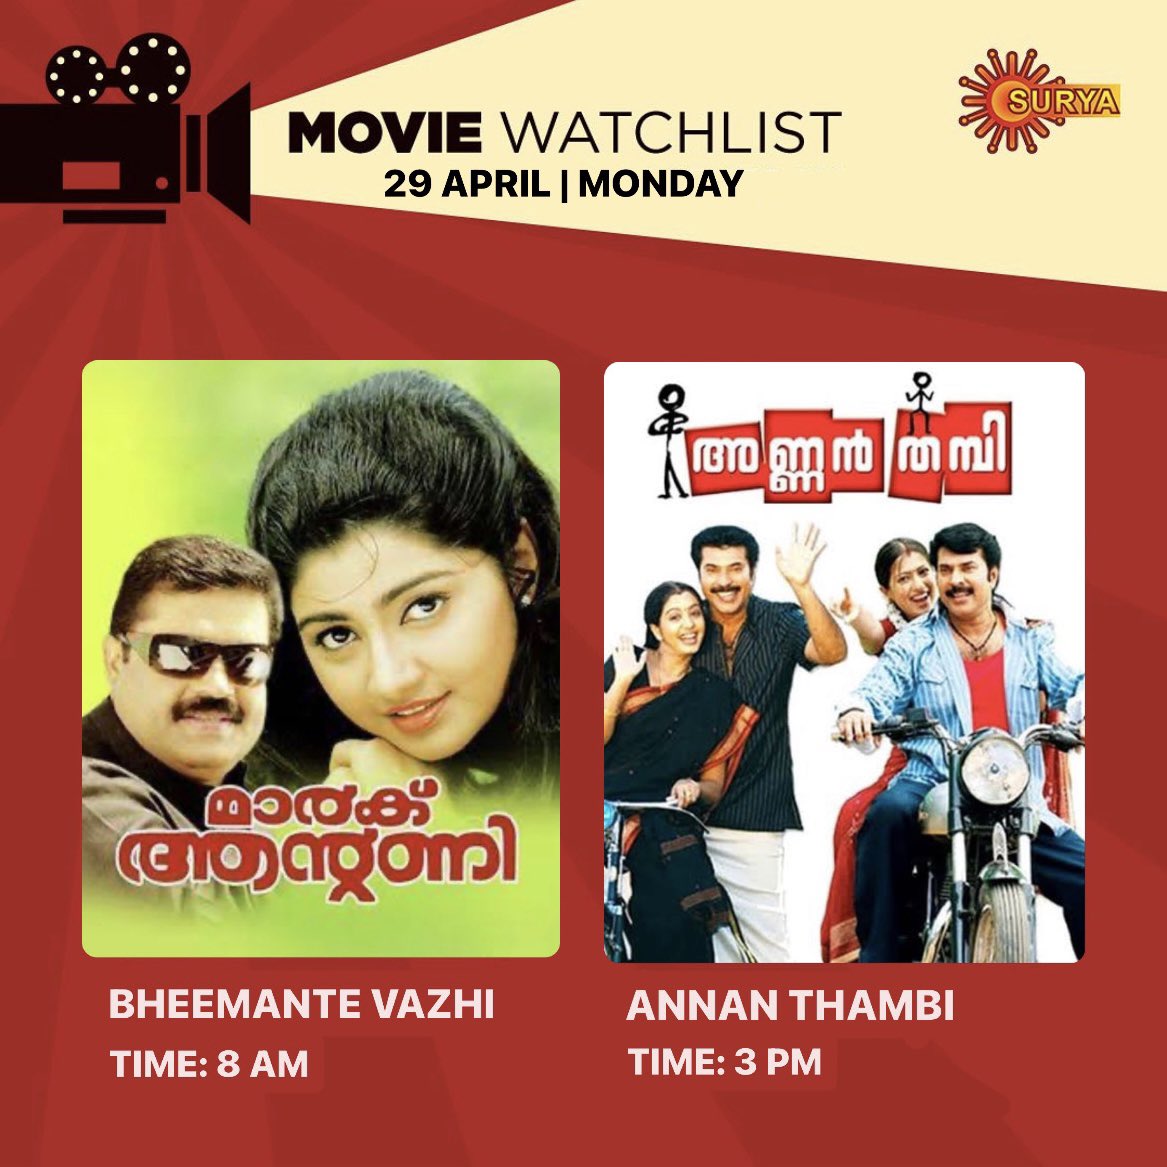 Here’s your Monday watchlist! 😎

WATCHLIST | APRIL 29 

#SuryaTV #MarkAntony #AnnanThambi #SureshGopi #Mammootty #MoviesOnSuryaTV #MalayalamMovies